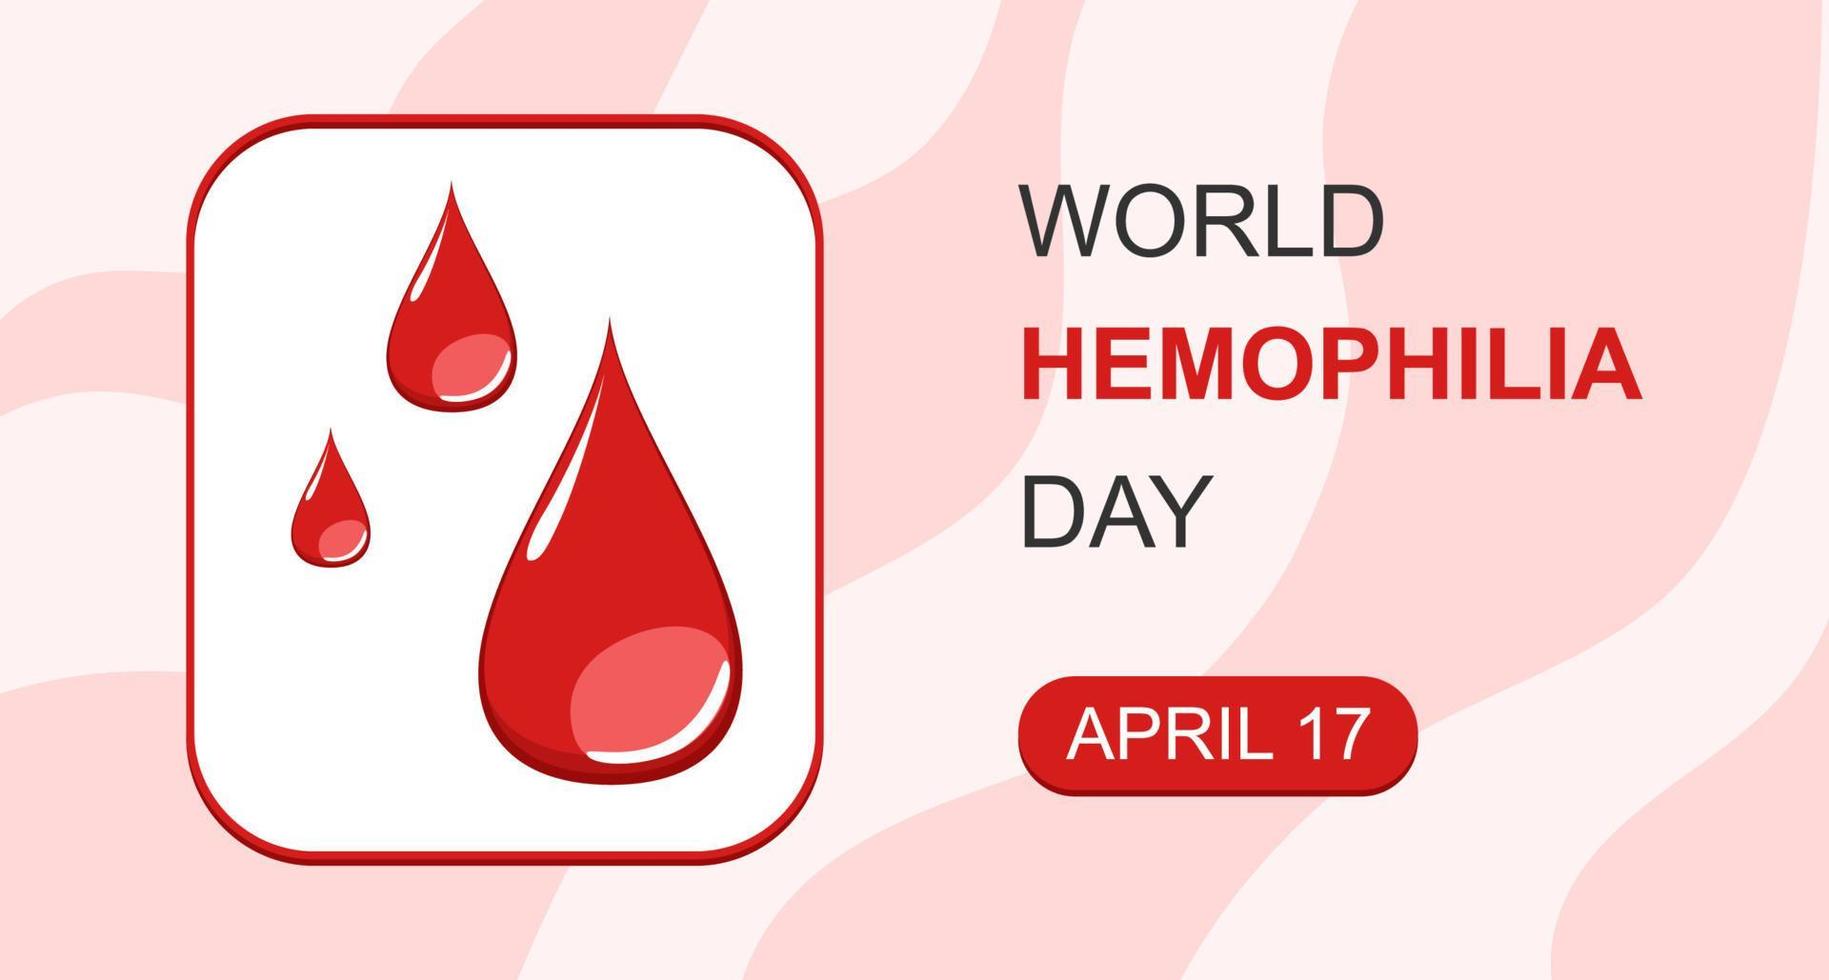 wereld hemofilie dag vector spandoek. rood druppels en kader. bloed druppeltje en tekst met datum april 17